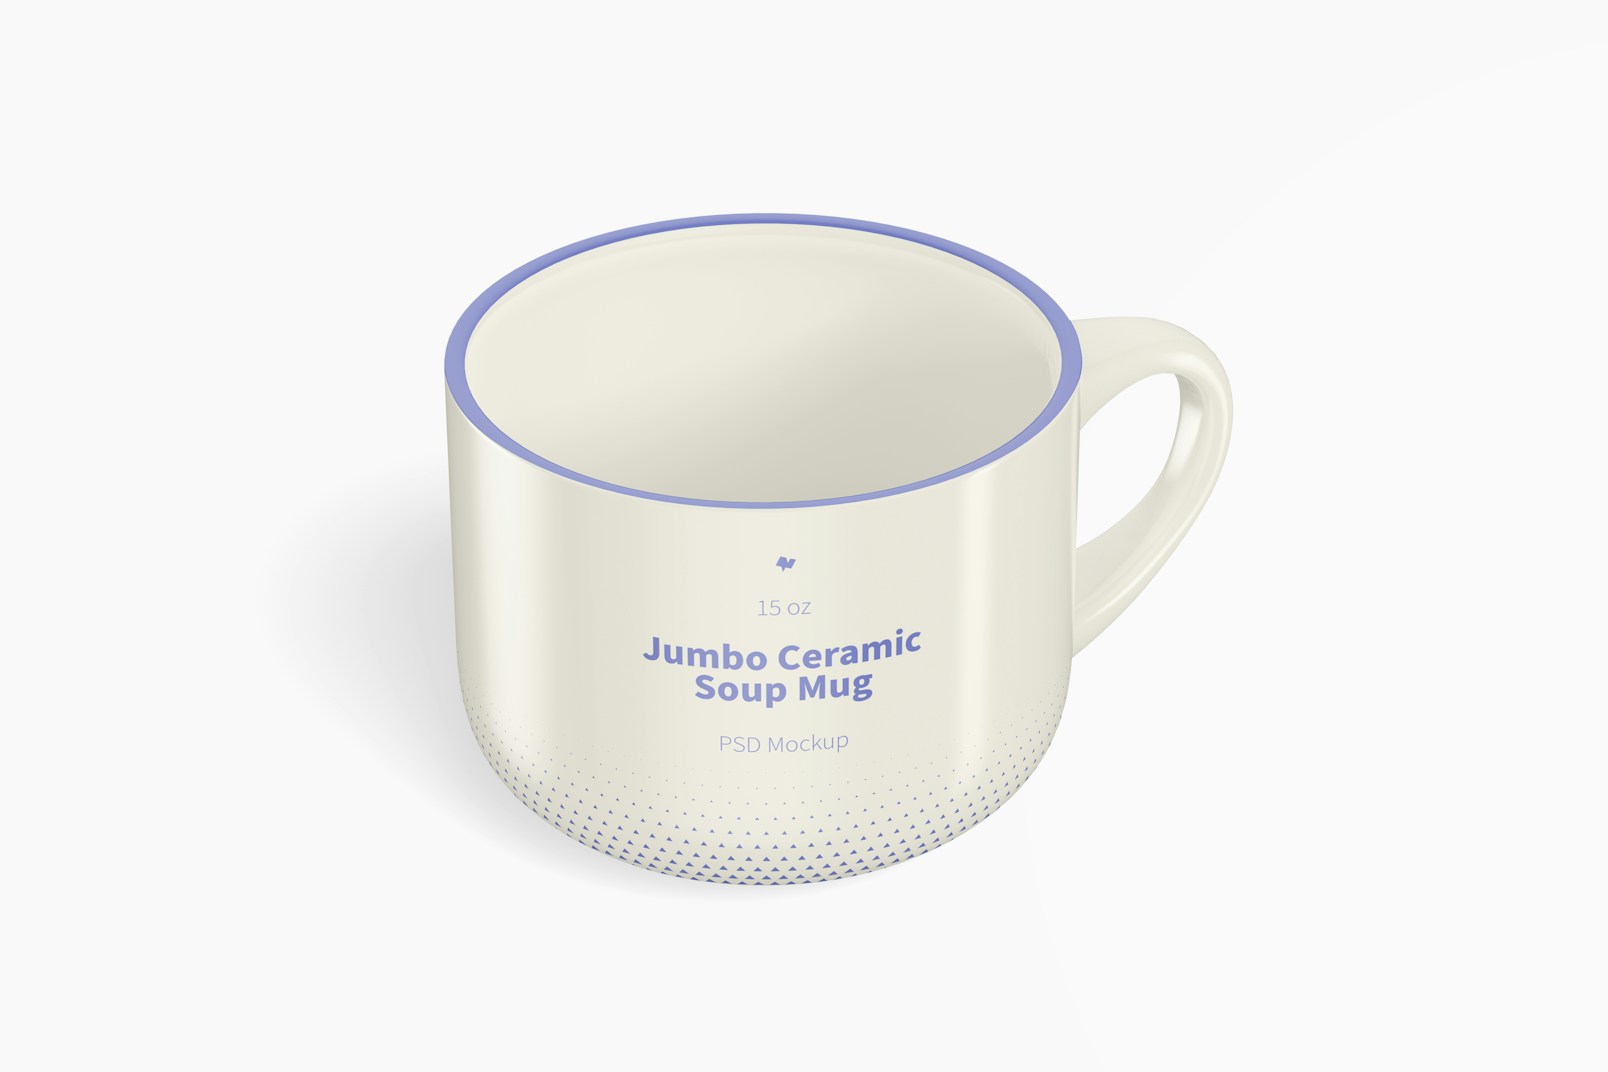 15 oz Jumbo Ceramic Soup Mug Mockup, Isometric Right View